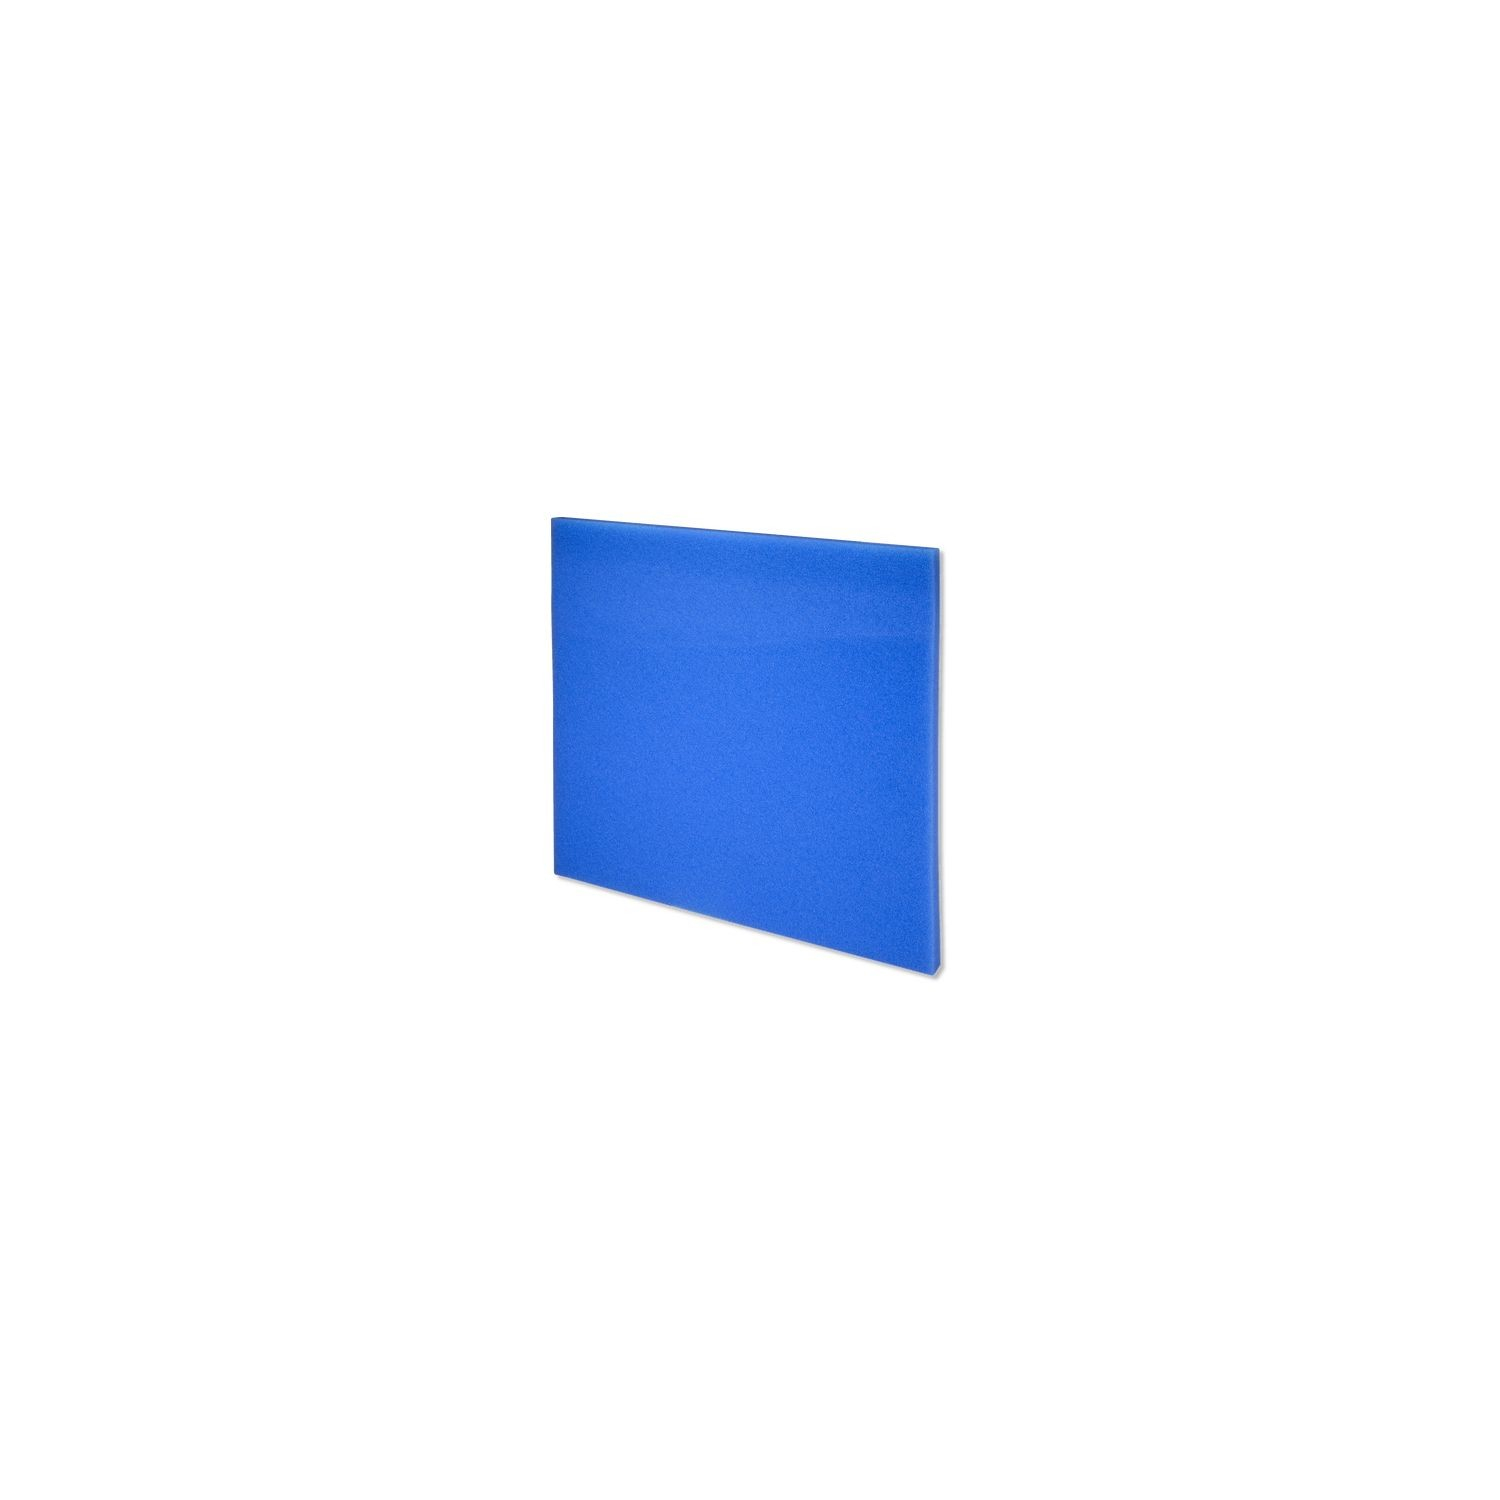 JBL Fijn of grof blauw filterschuim 50x50x5 cm